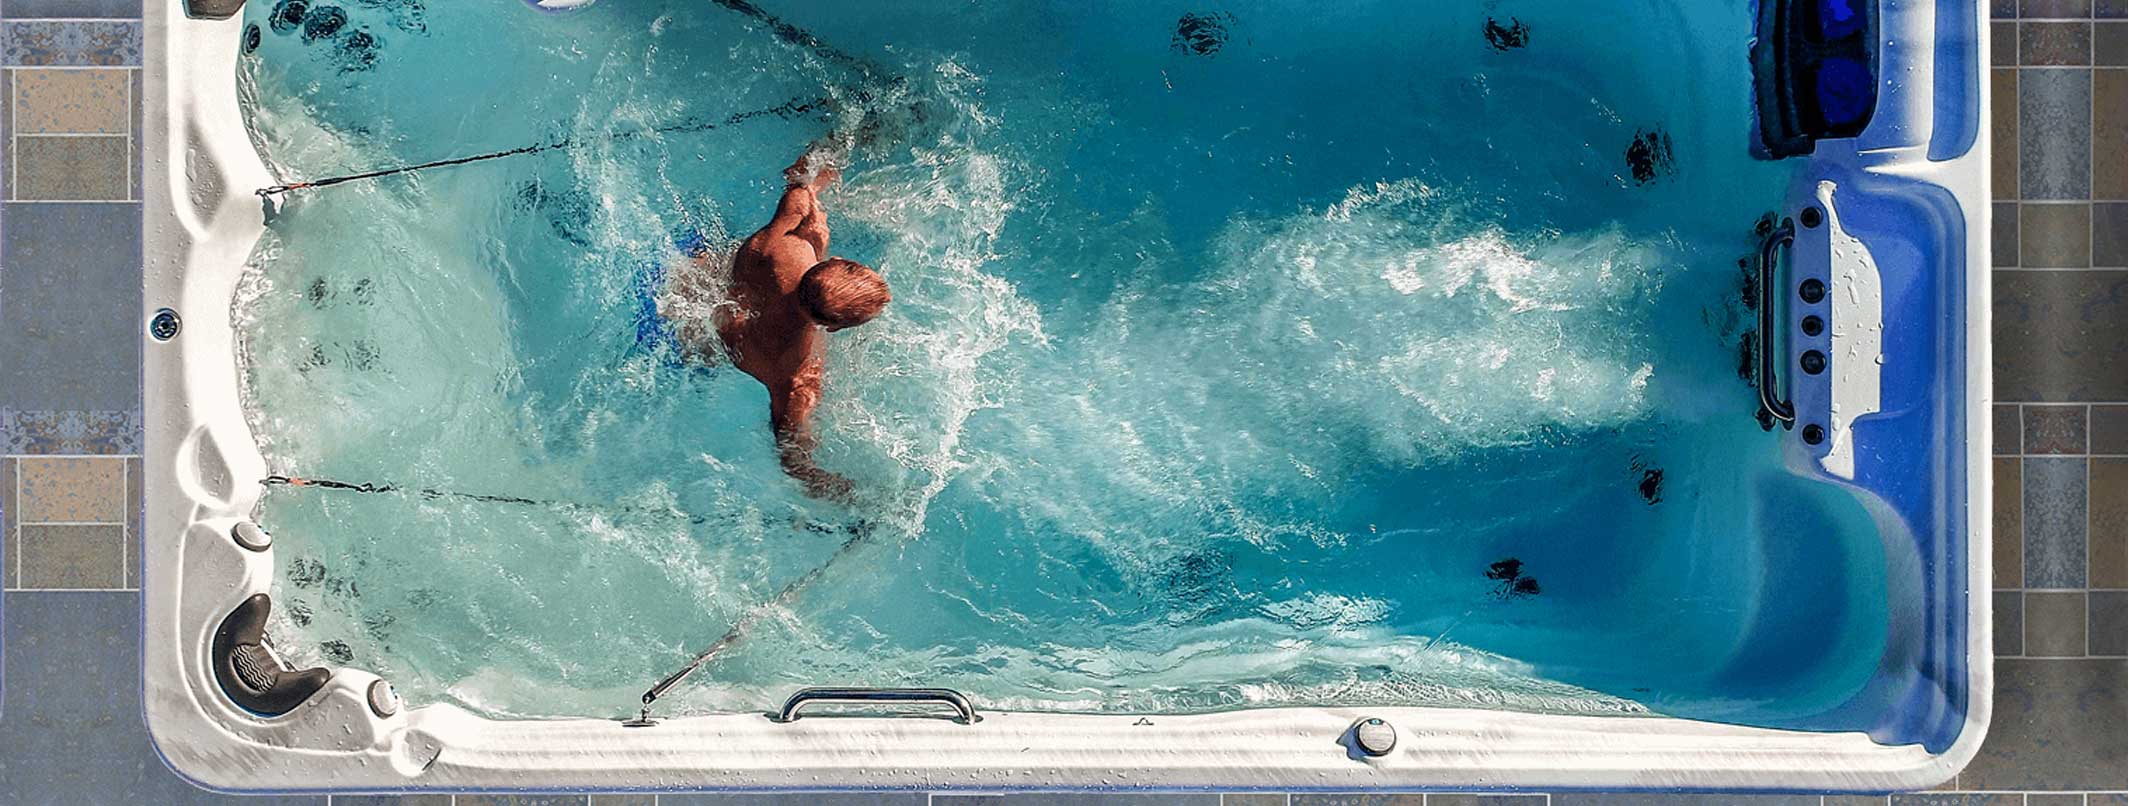 TidalFit EP15 Exercise Swim Spa & Hot Tub by Artesian Spas